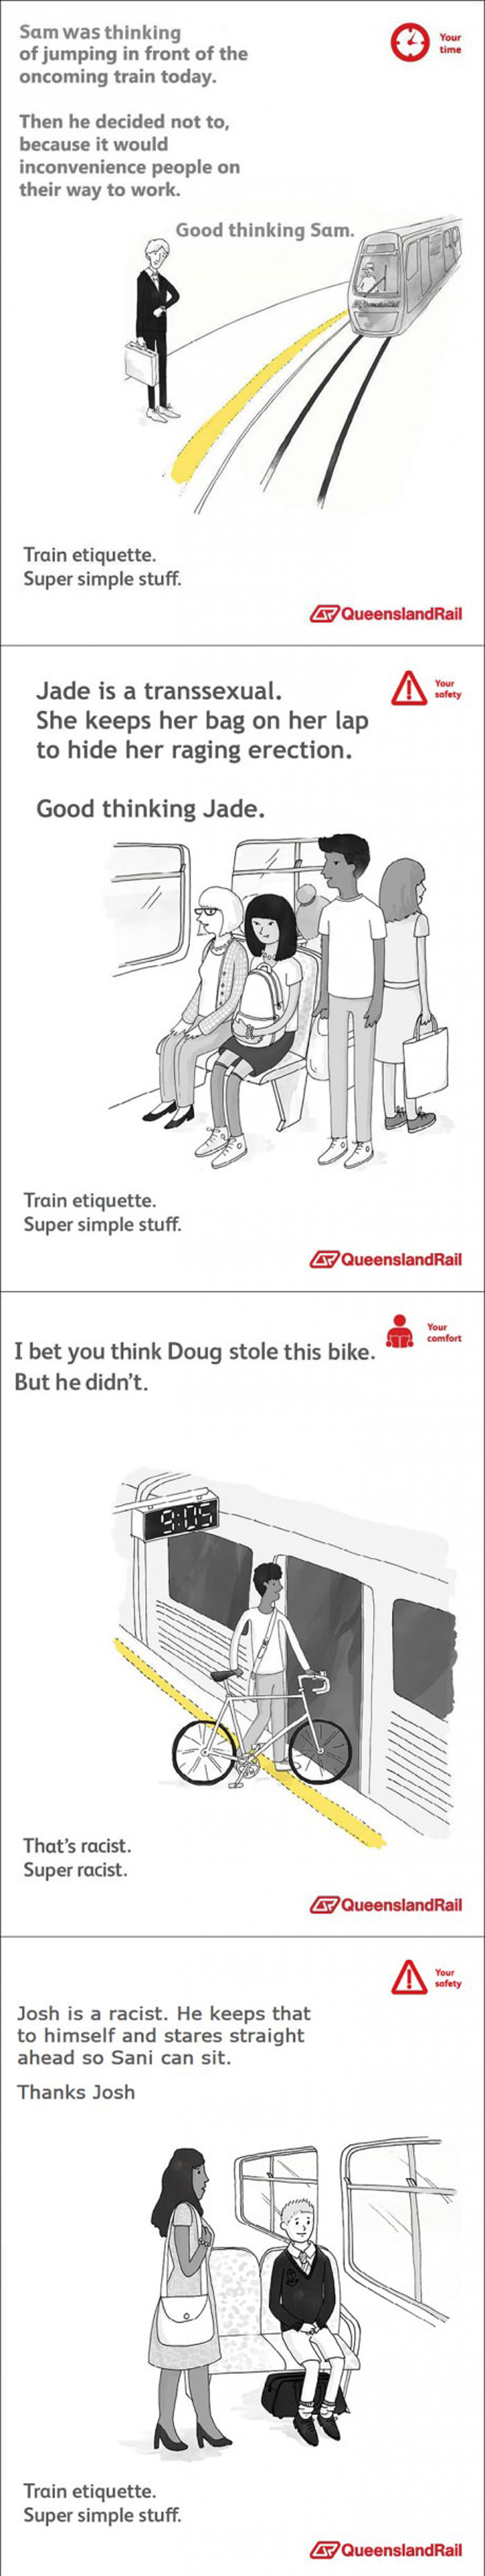 Queensland Rail Funny